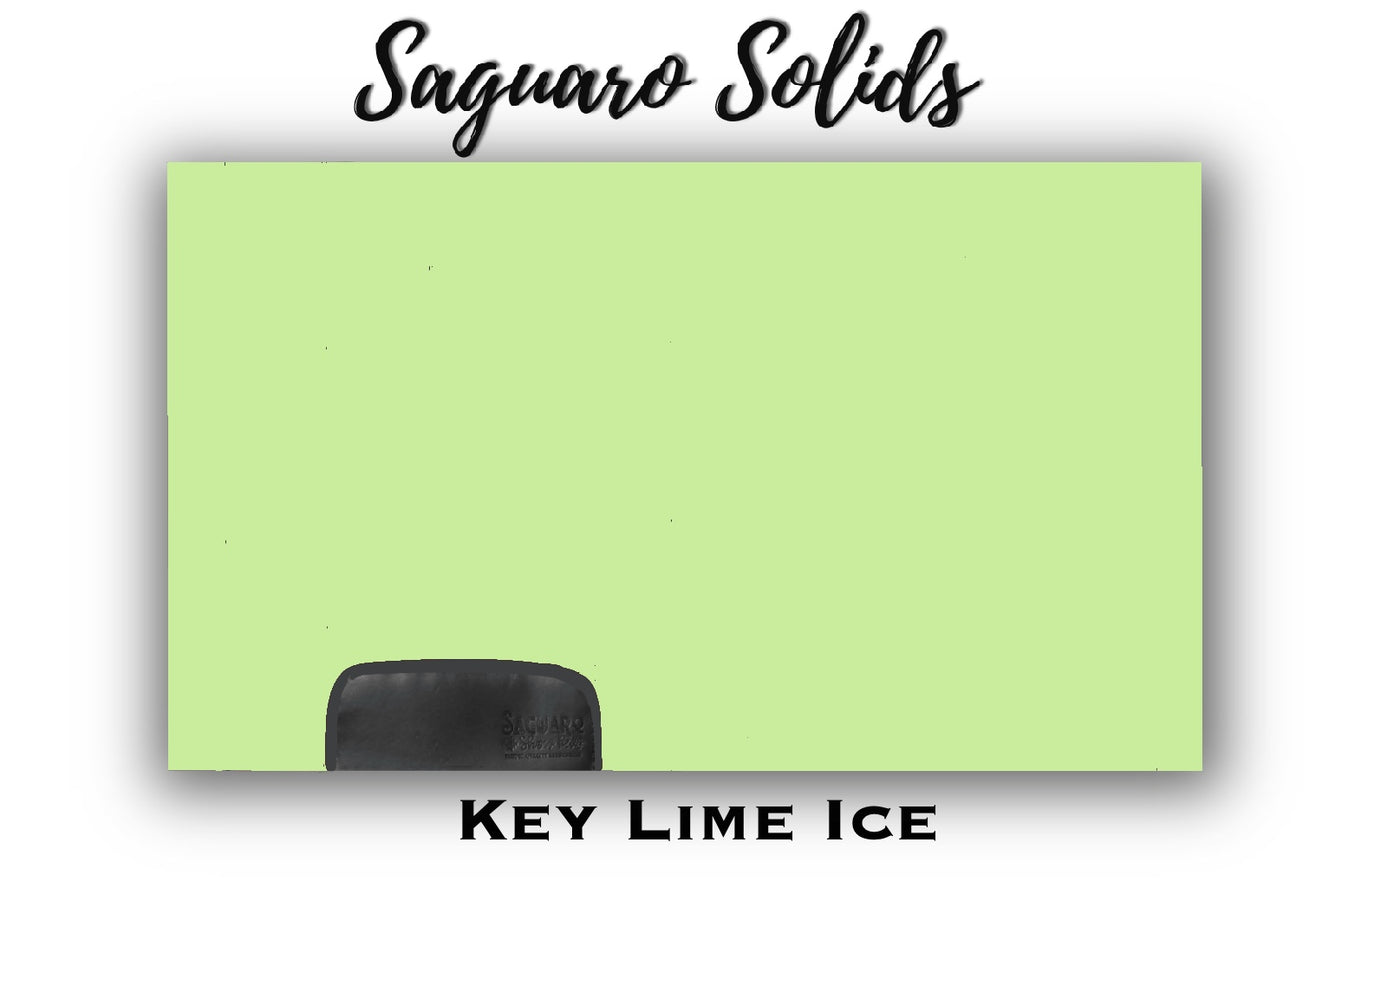 Saguaro Solid "Key Lime Ice" Show Pad (SEMI-CUSTOM)